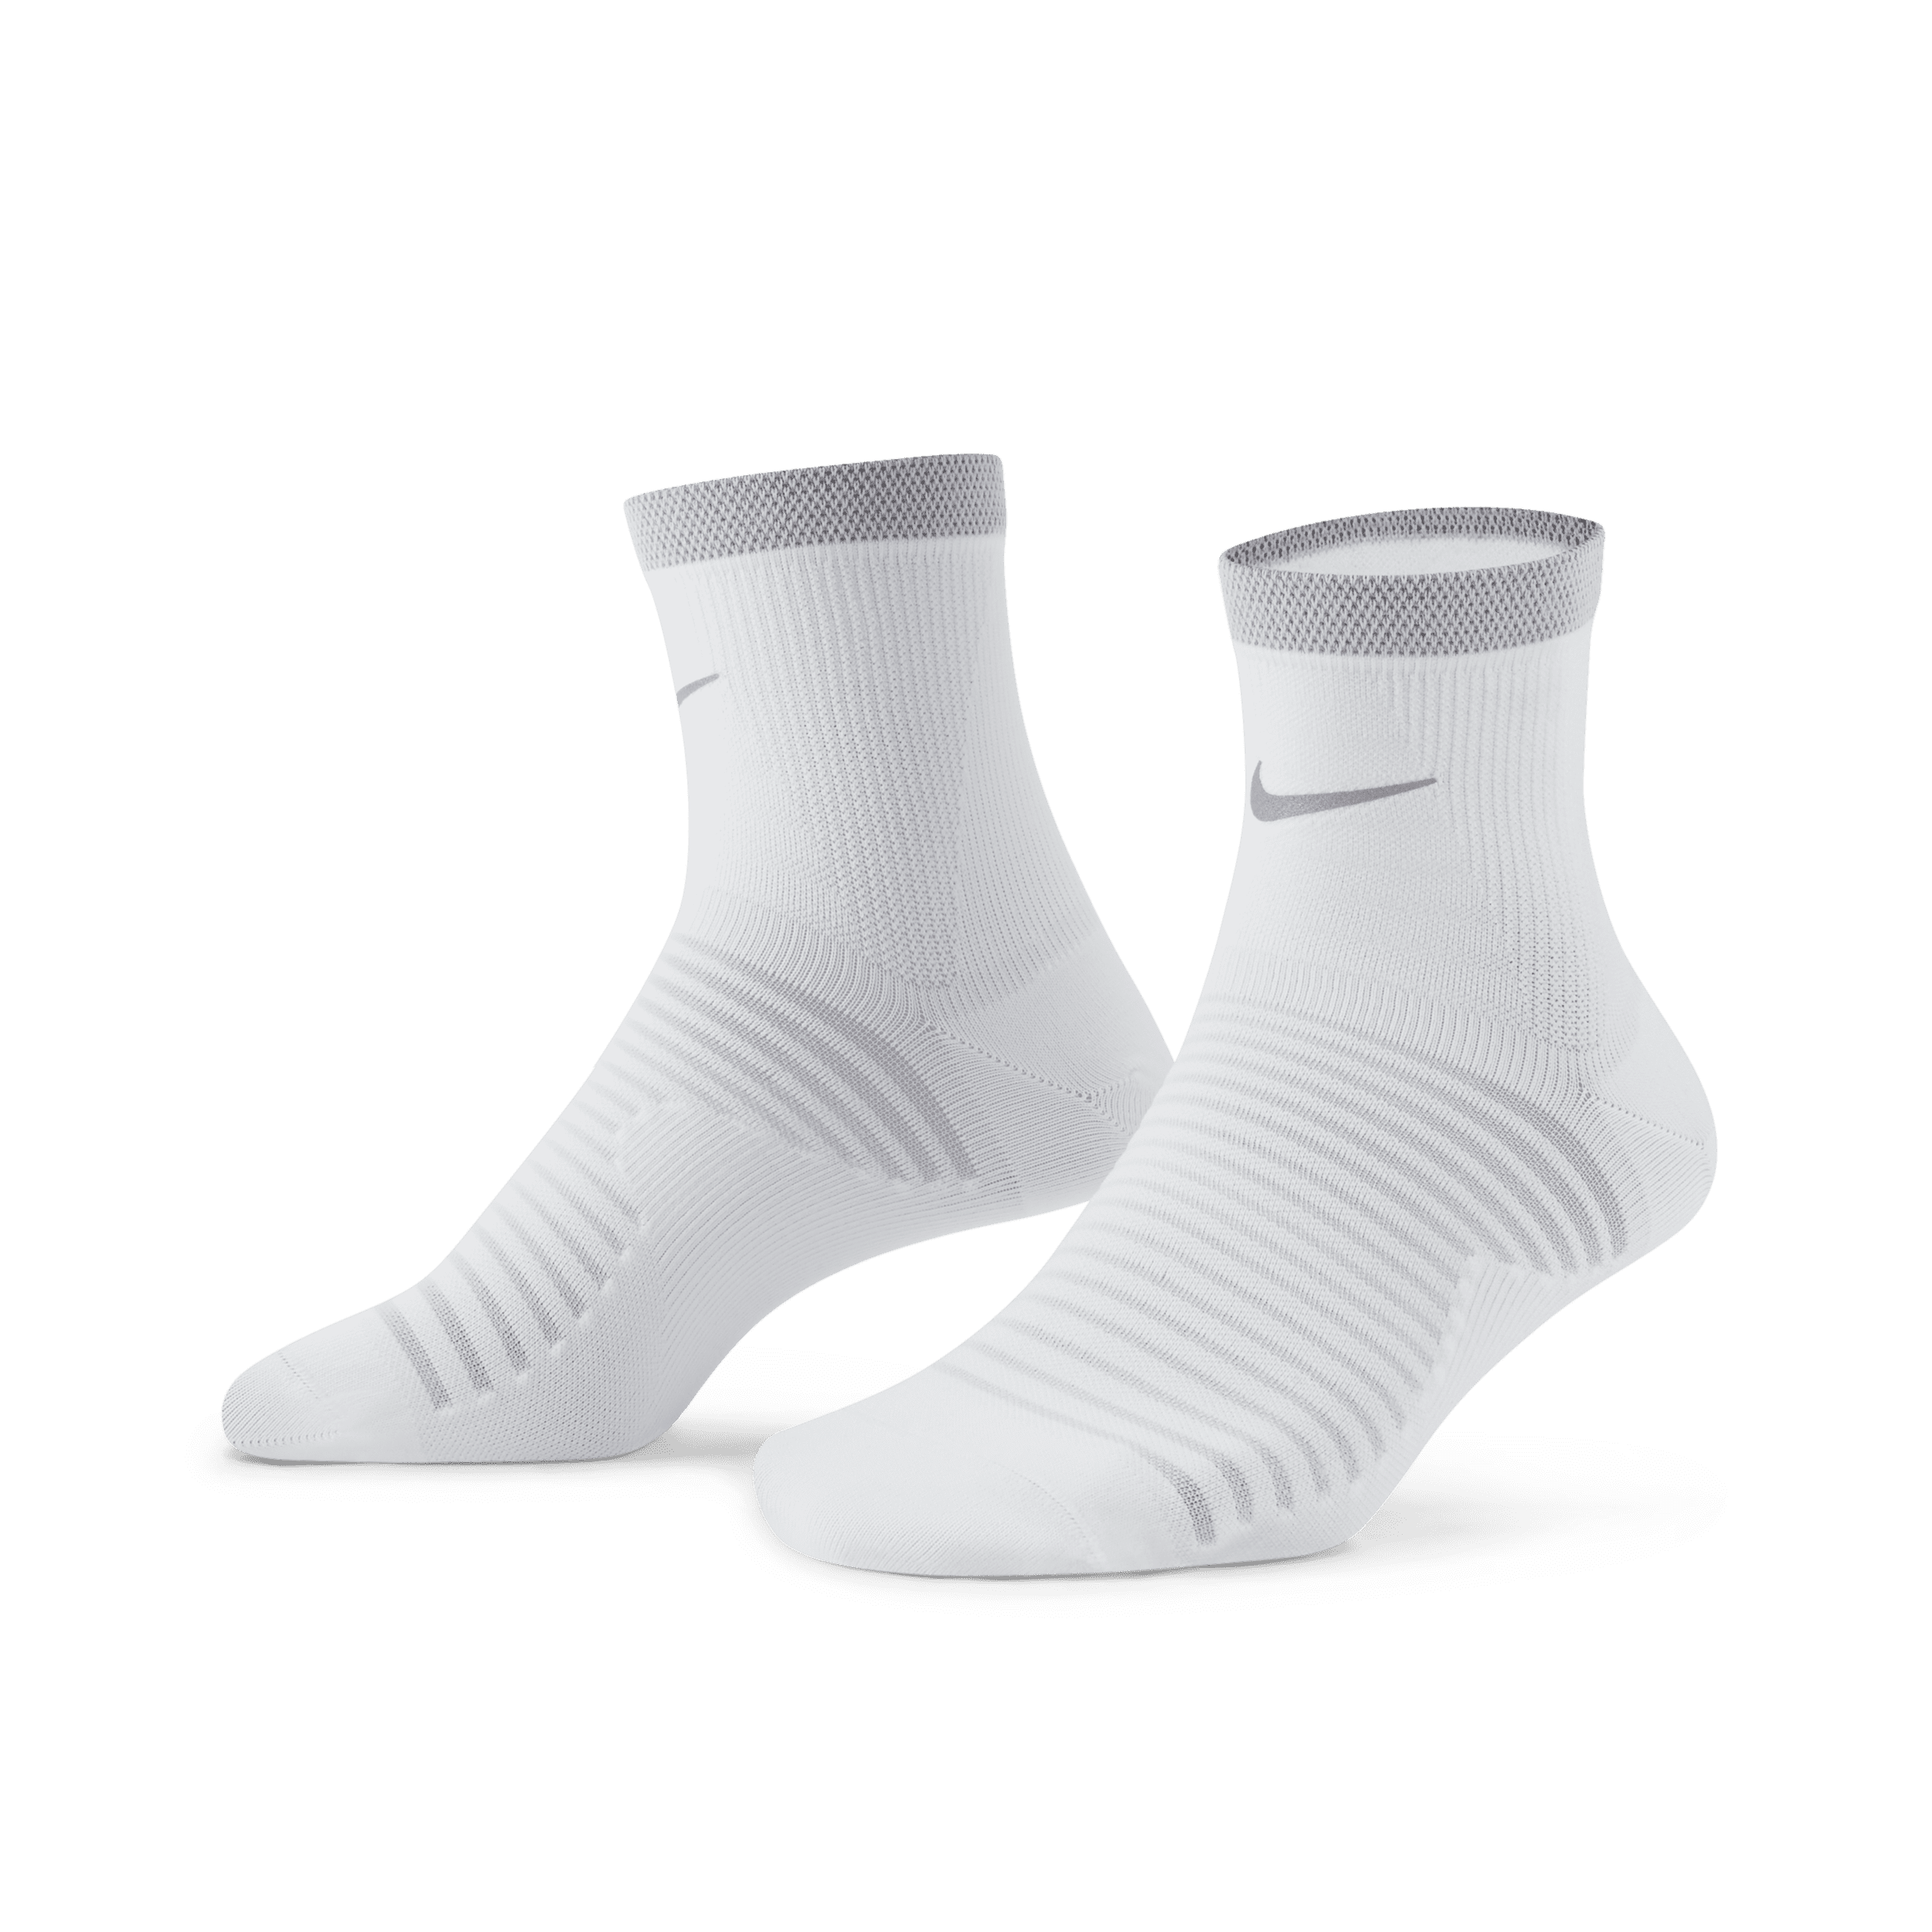 Nike Spark Lightweight Enkelsokken voor hardlopen - Wit